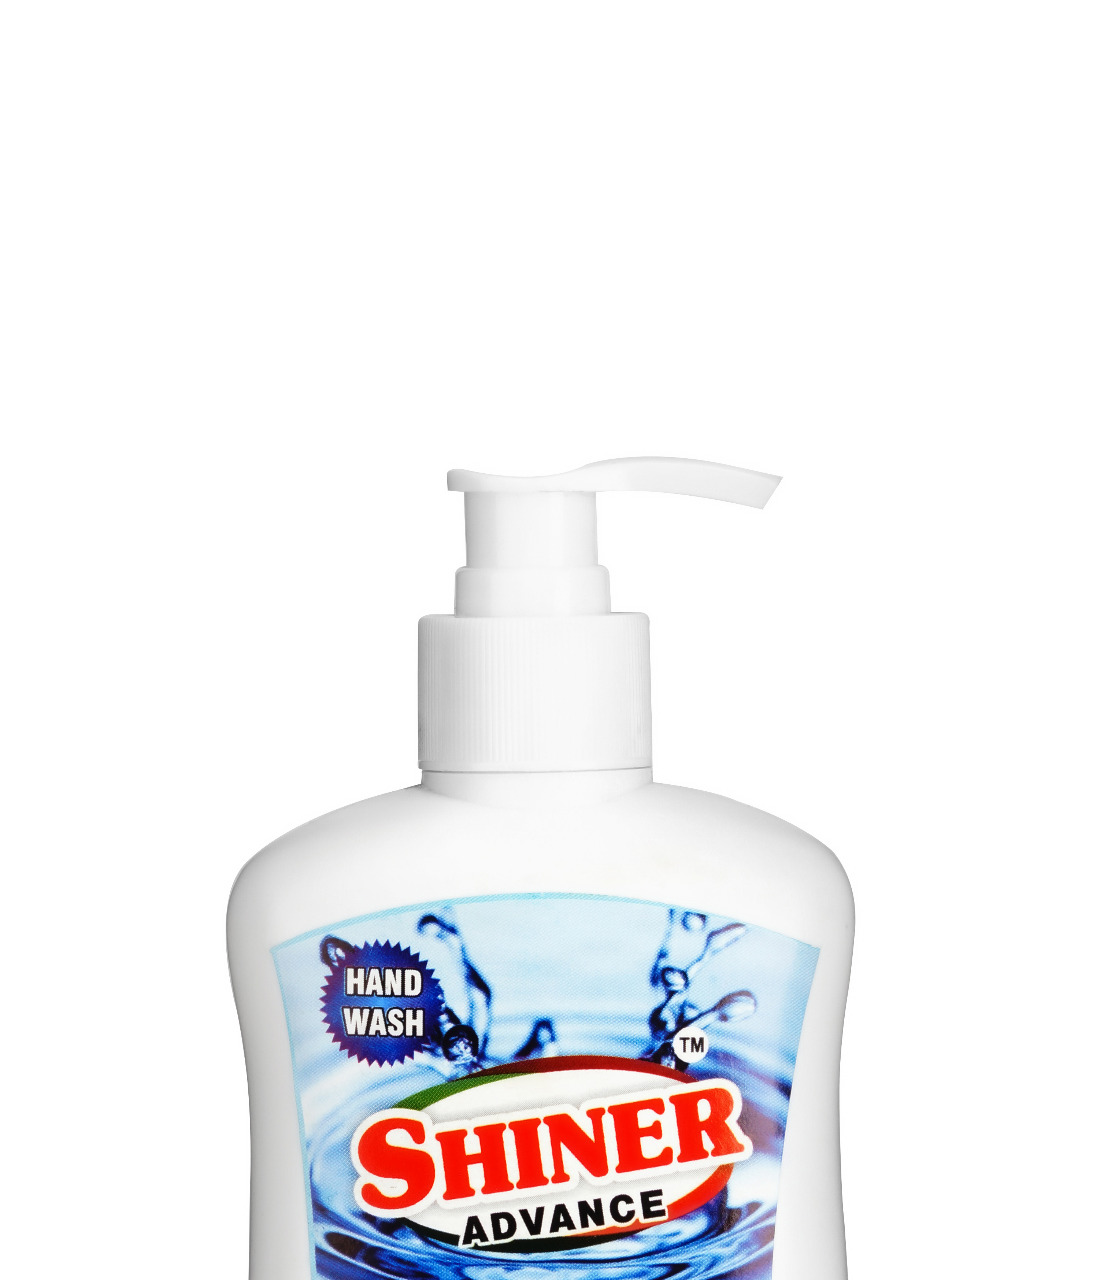 Shiner Advance Hand Wash - 250ml